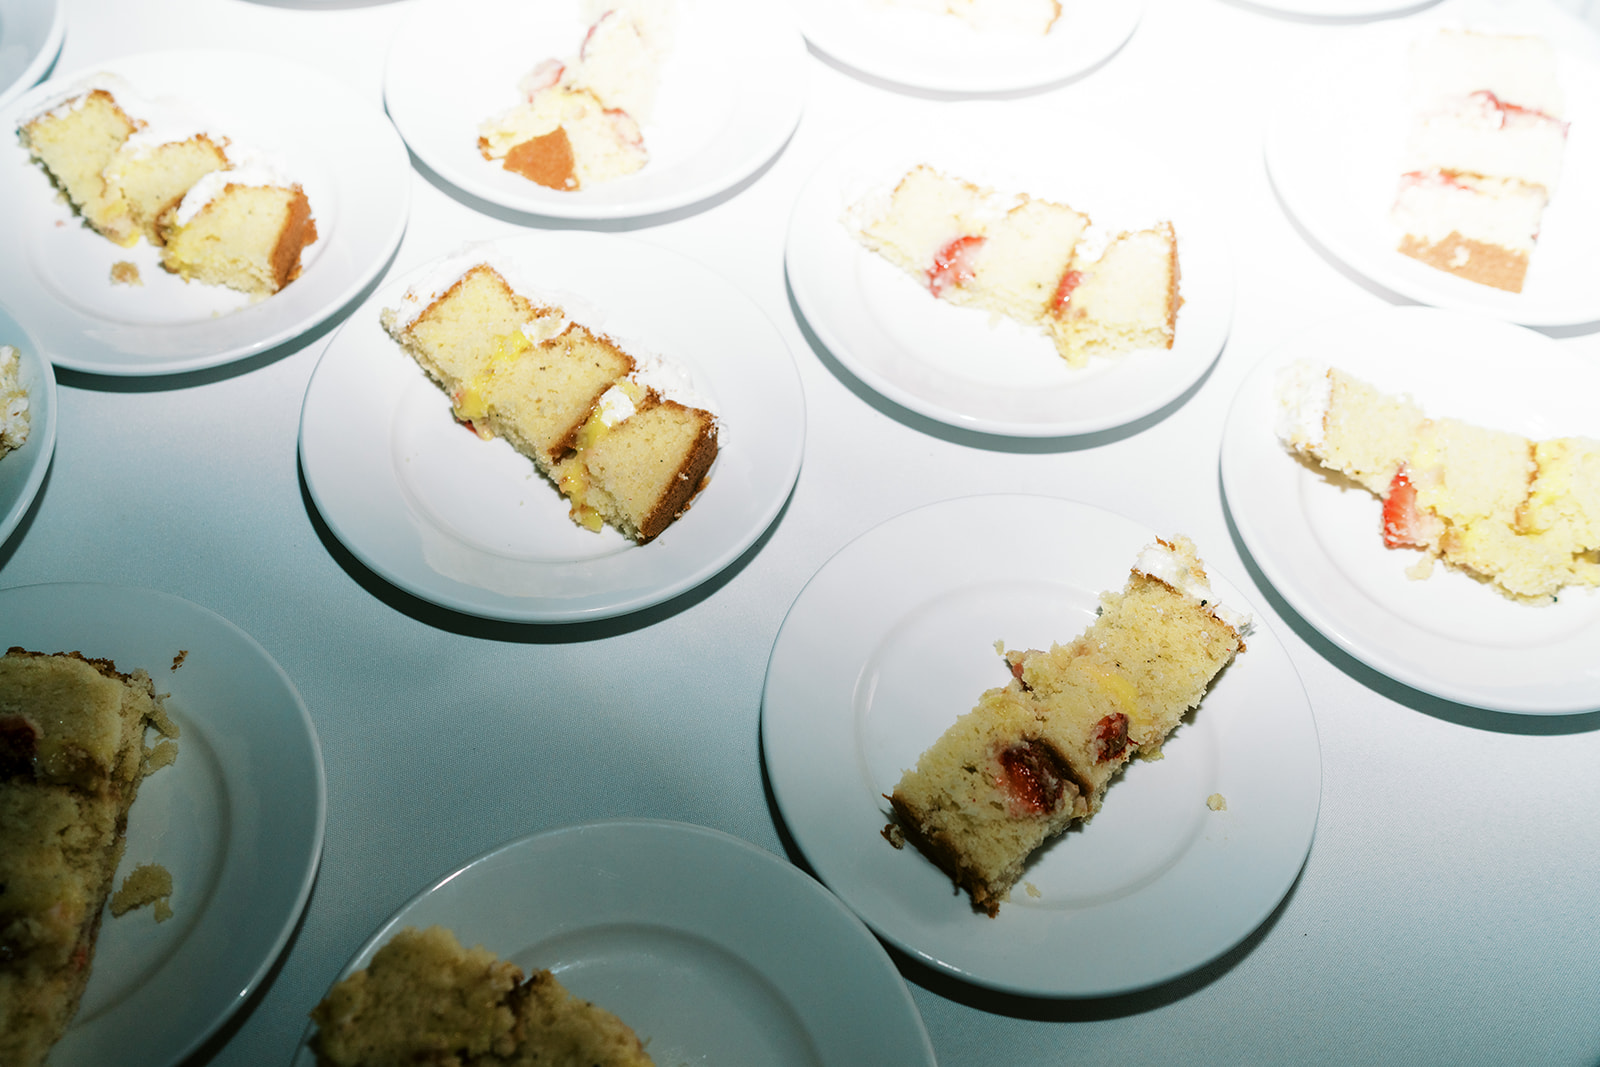 Plates of sliced cake arranged on a surface Wedding at Na ‘Āina Kai Botanical Gardens